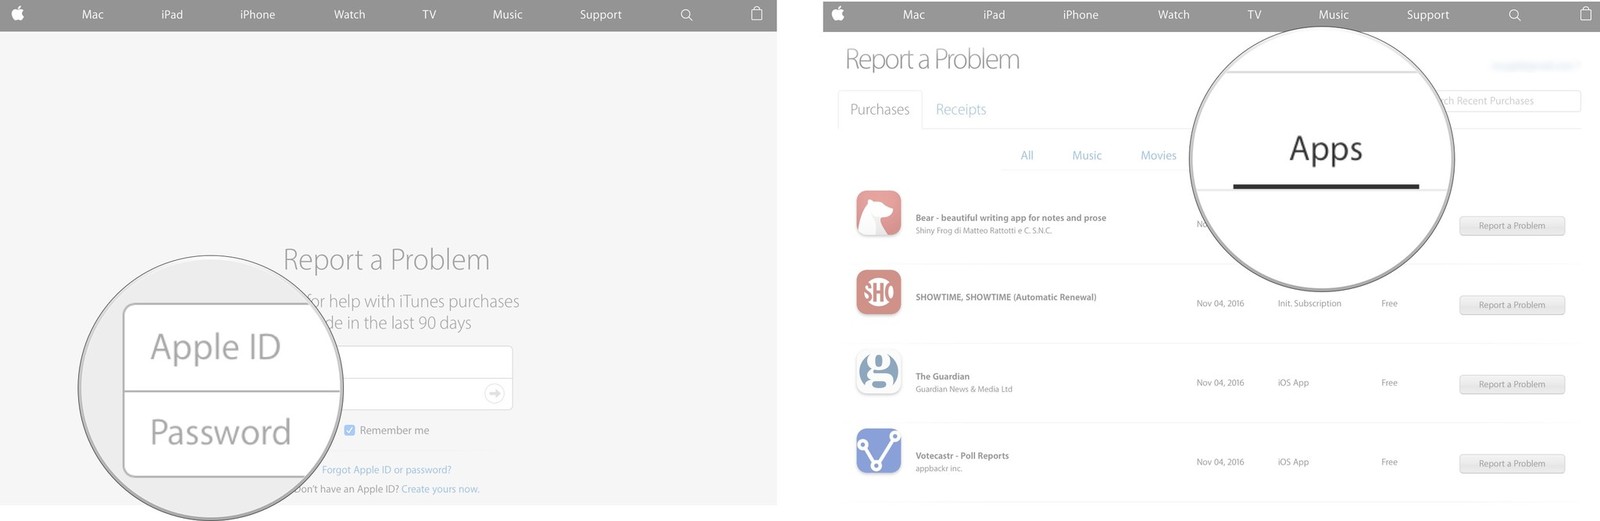 itunes-refund-report-website-mac-screenshot.jpg